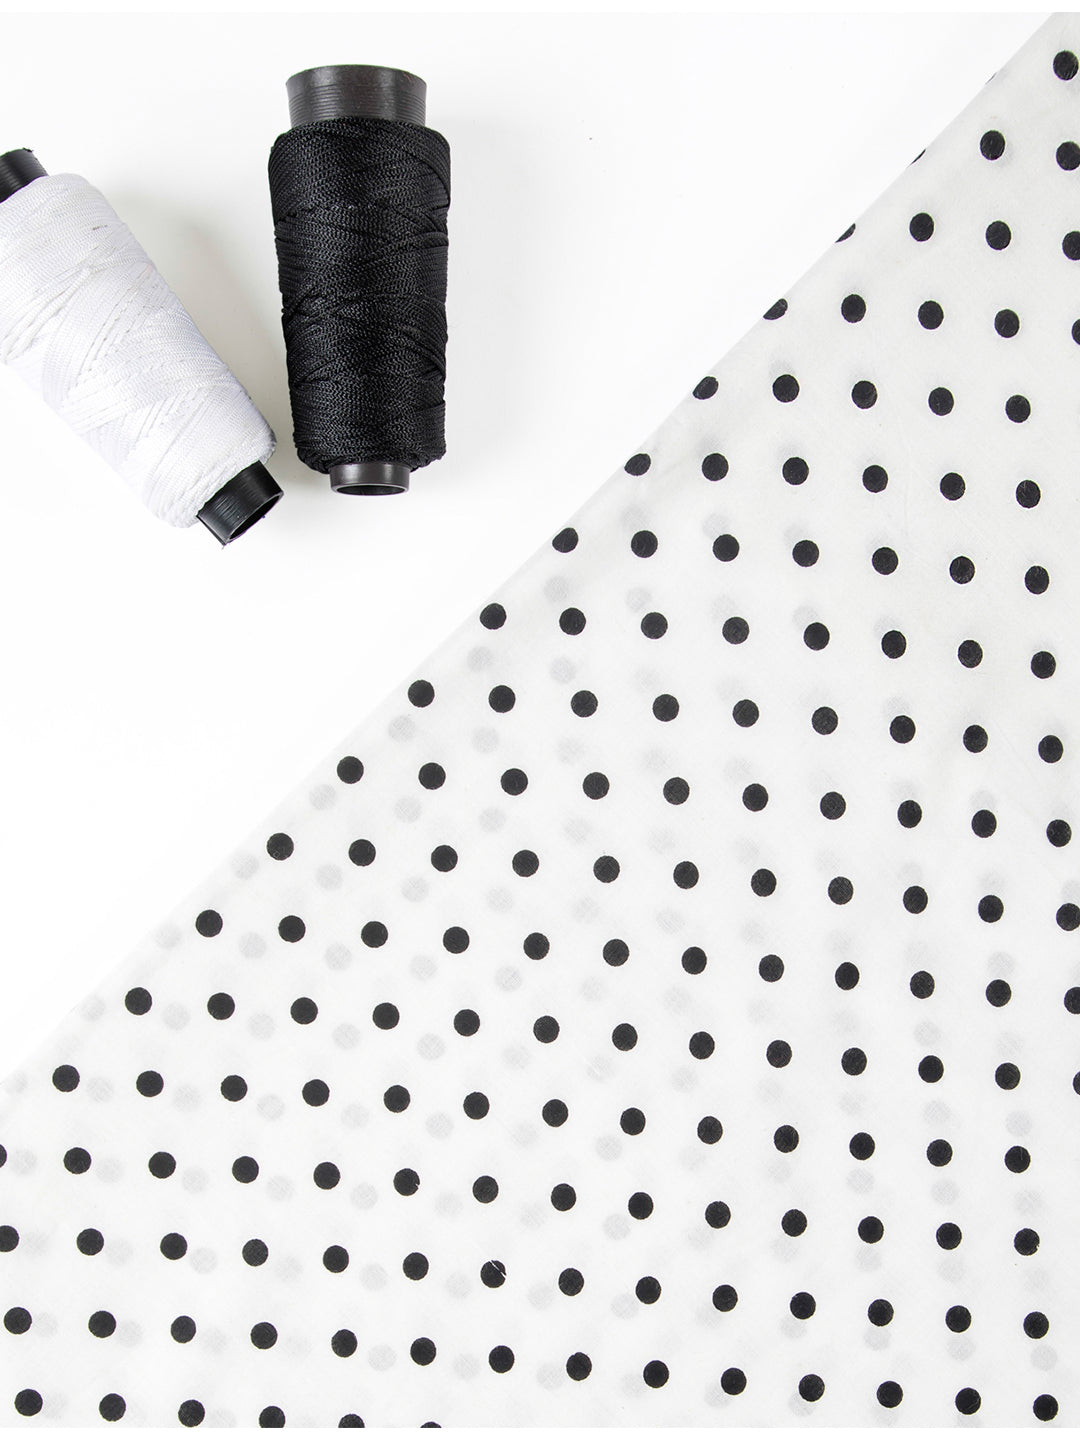 Polka Dots Print On Pure Cotton Fabric